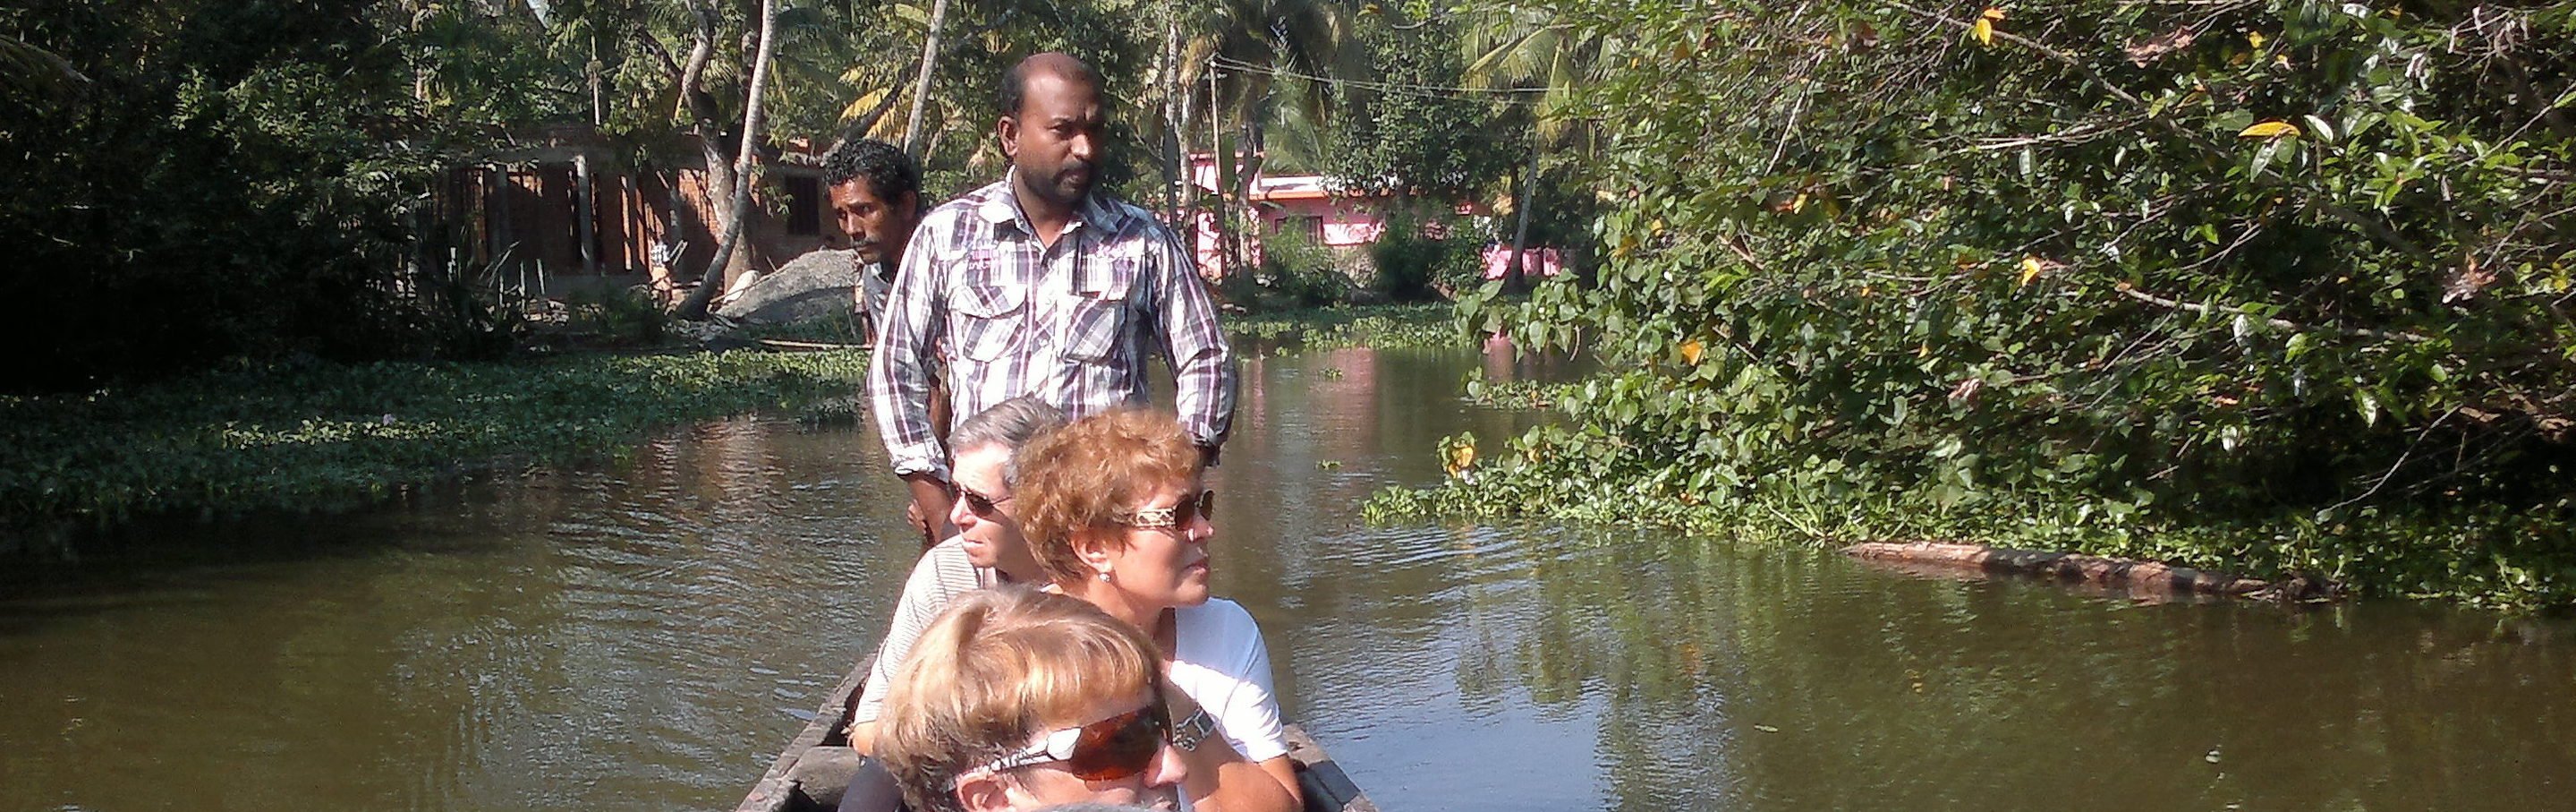 canal cruise backwater in Kerala